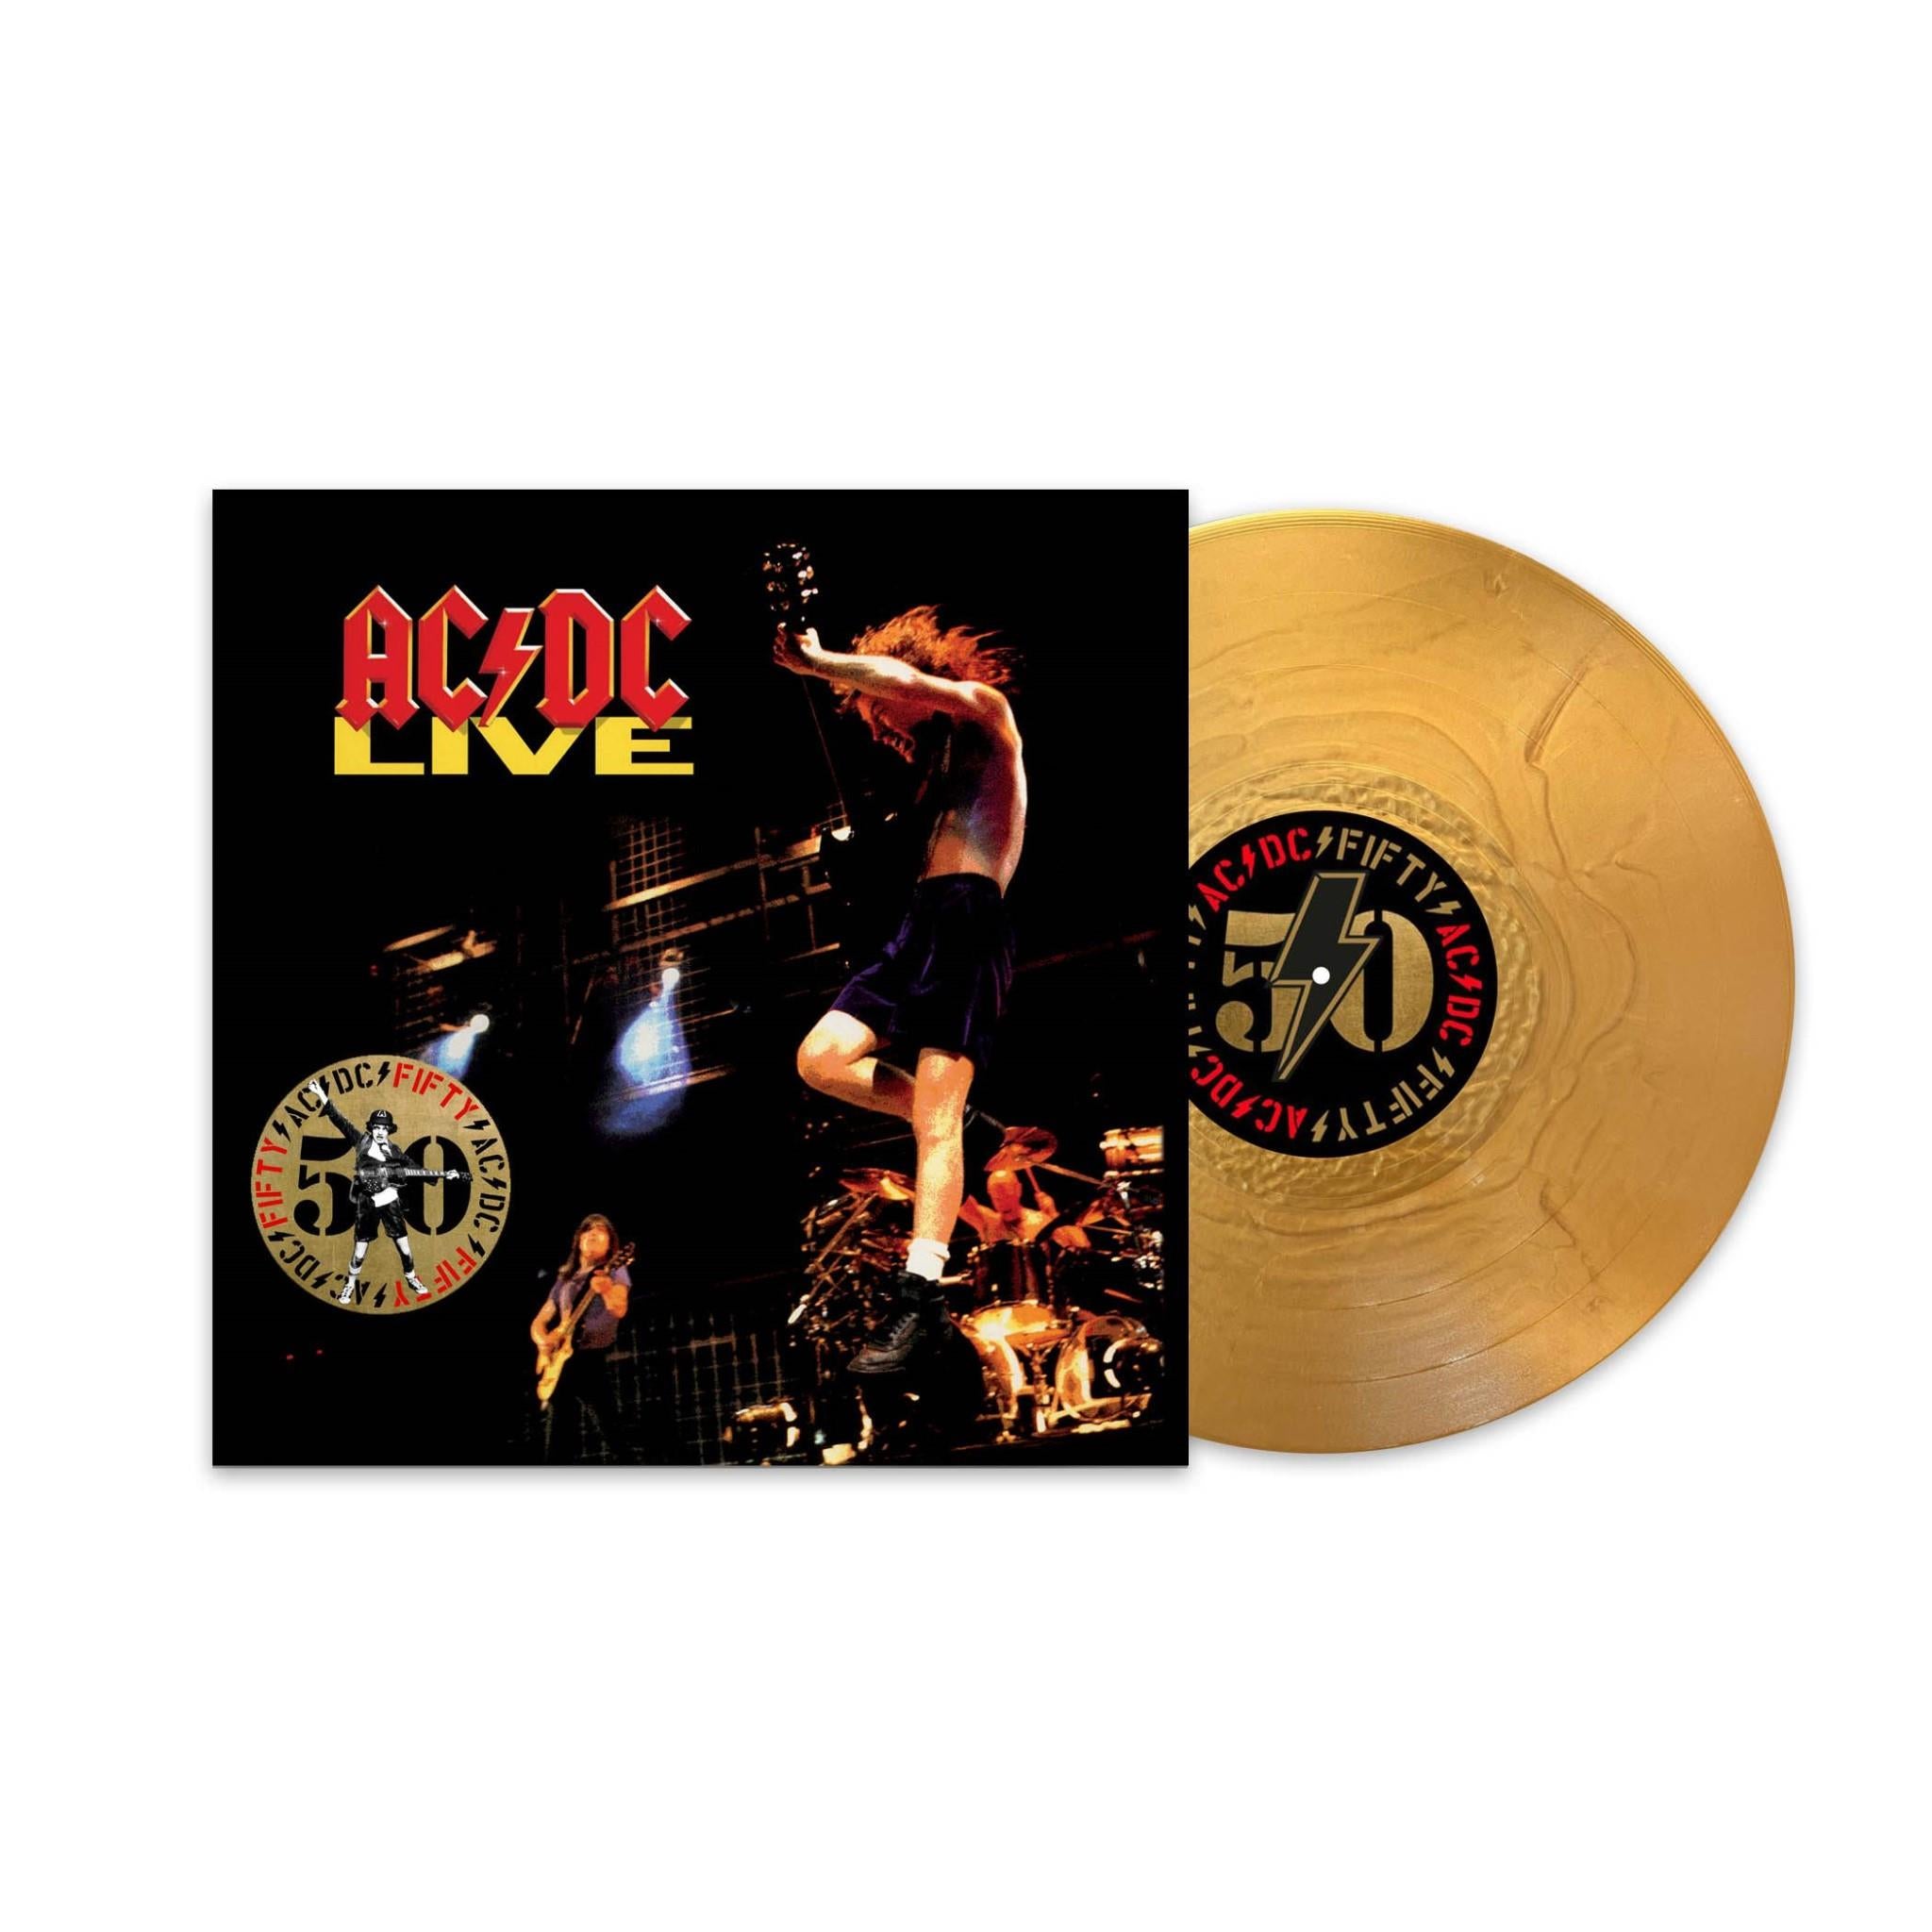 live (180gm gold nugget vinyl)